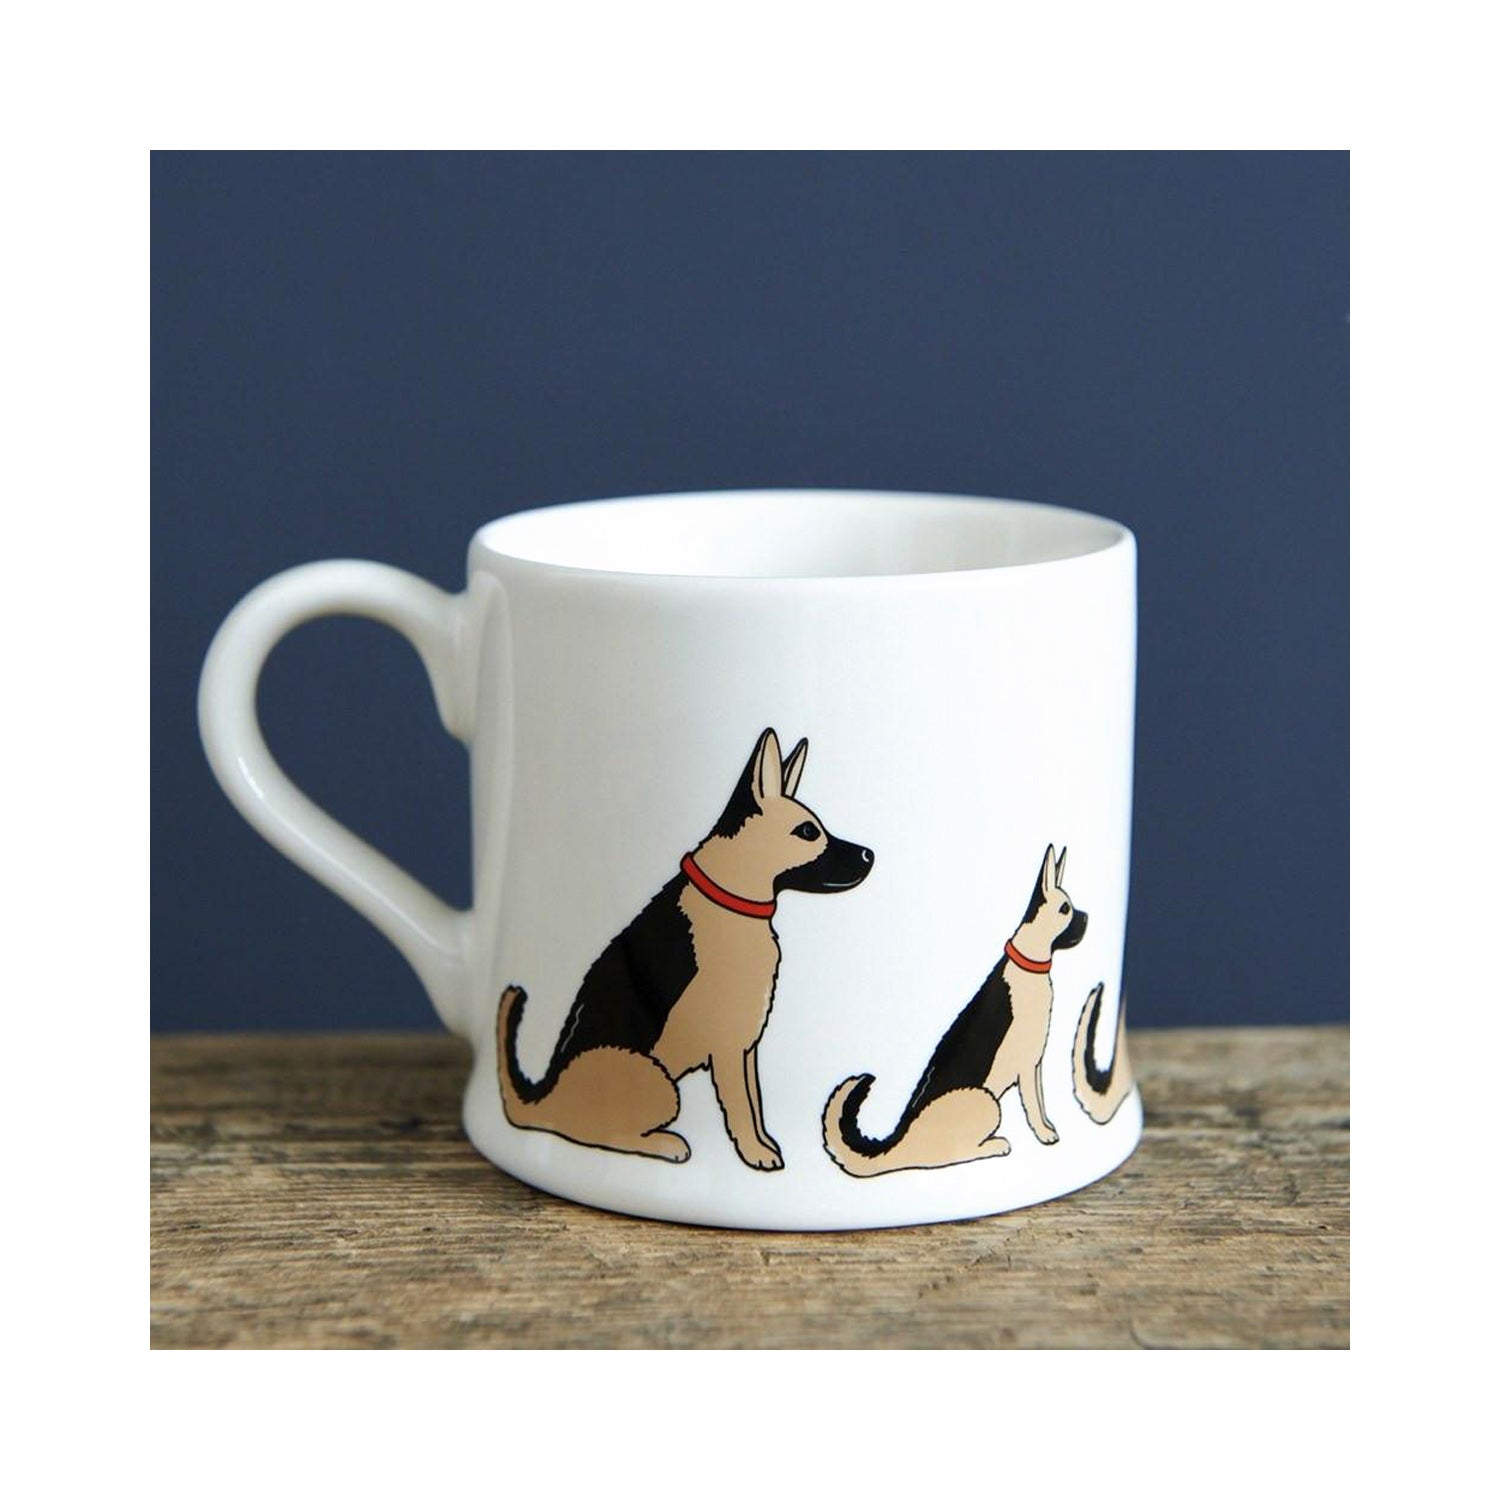 DogKrazyGifts - Sebastian The German Shepherd Dog Mug - part of the Sweet William range available from Dog Krazy Gifts